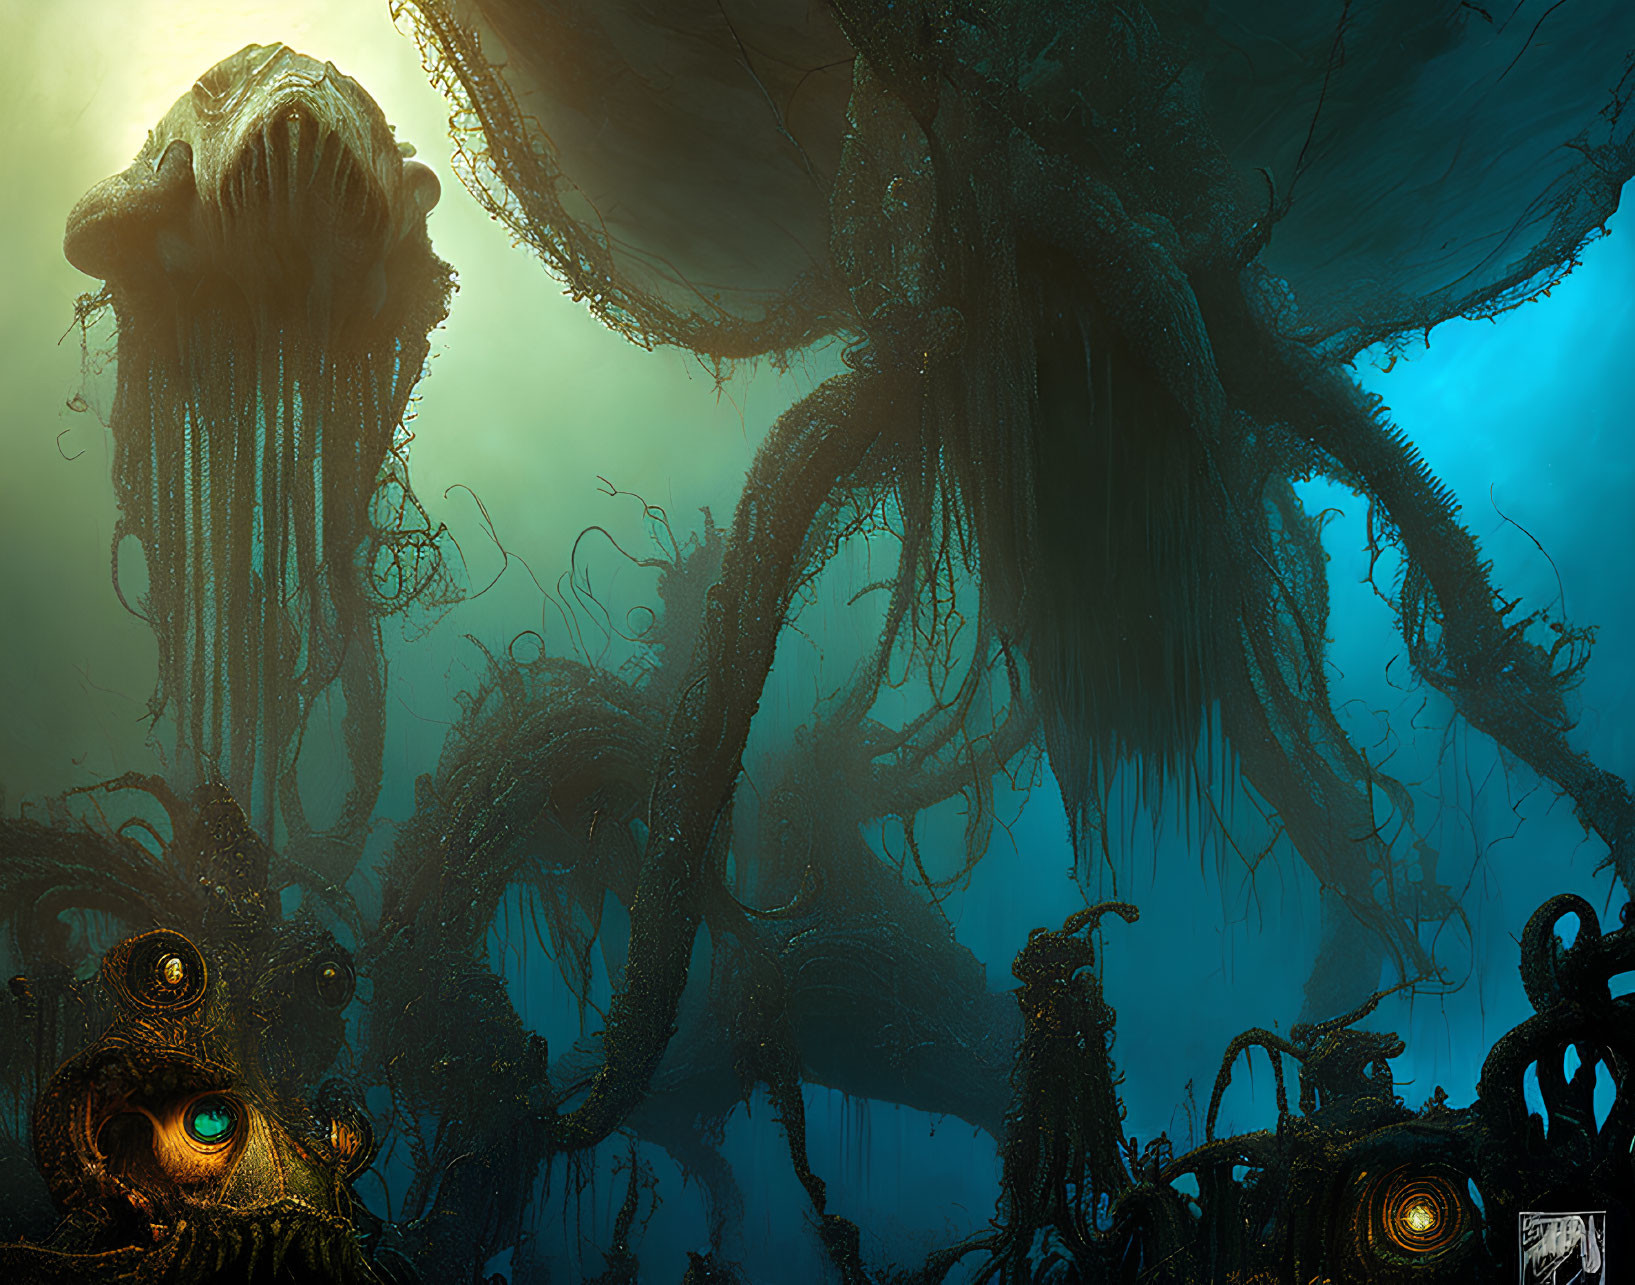 Enigmatic underwater landscape with massive jellyfish creature and alien vegetation